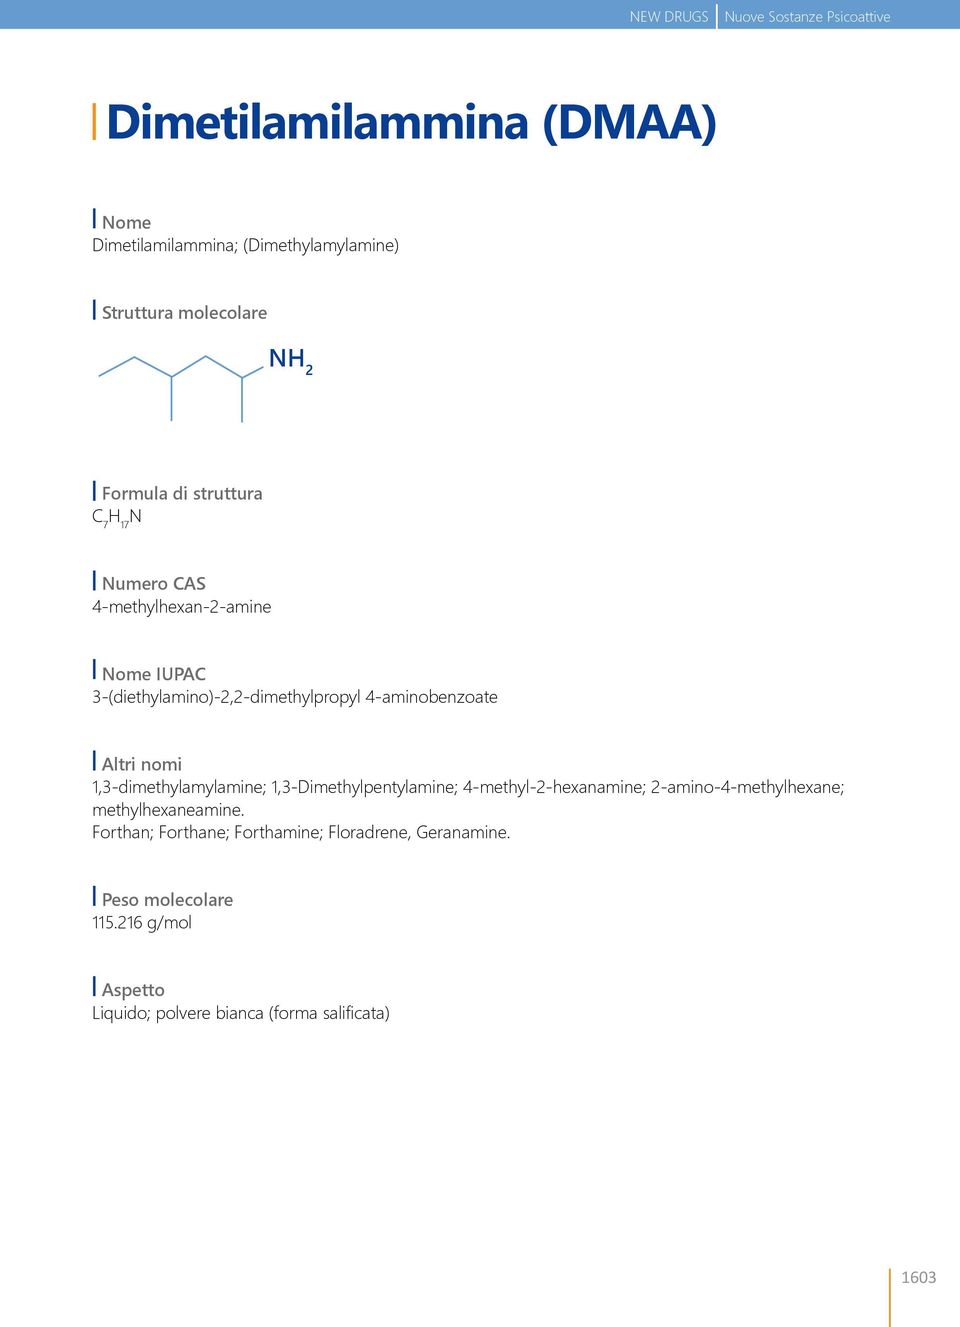 Altri nomi 1,3-dimethylamylamine; 1,3-Dimethylpentylamine; 4-methyl-2-hexanamine; 2-amino-4-methylhexane; methylhexaneamine.